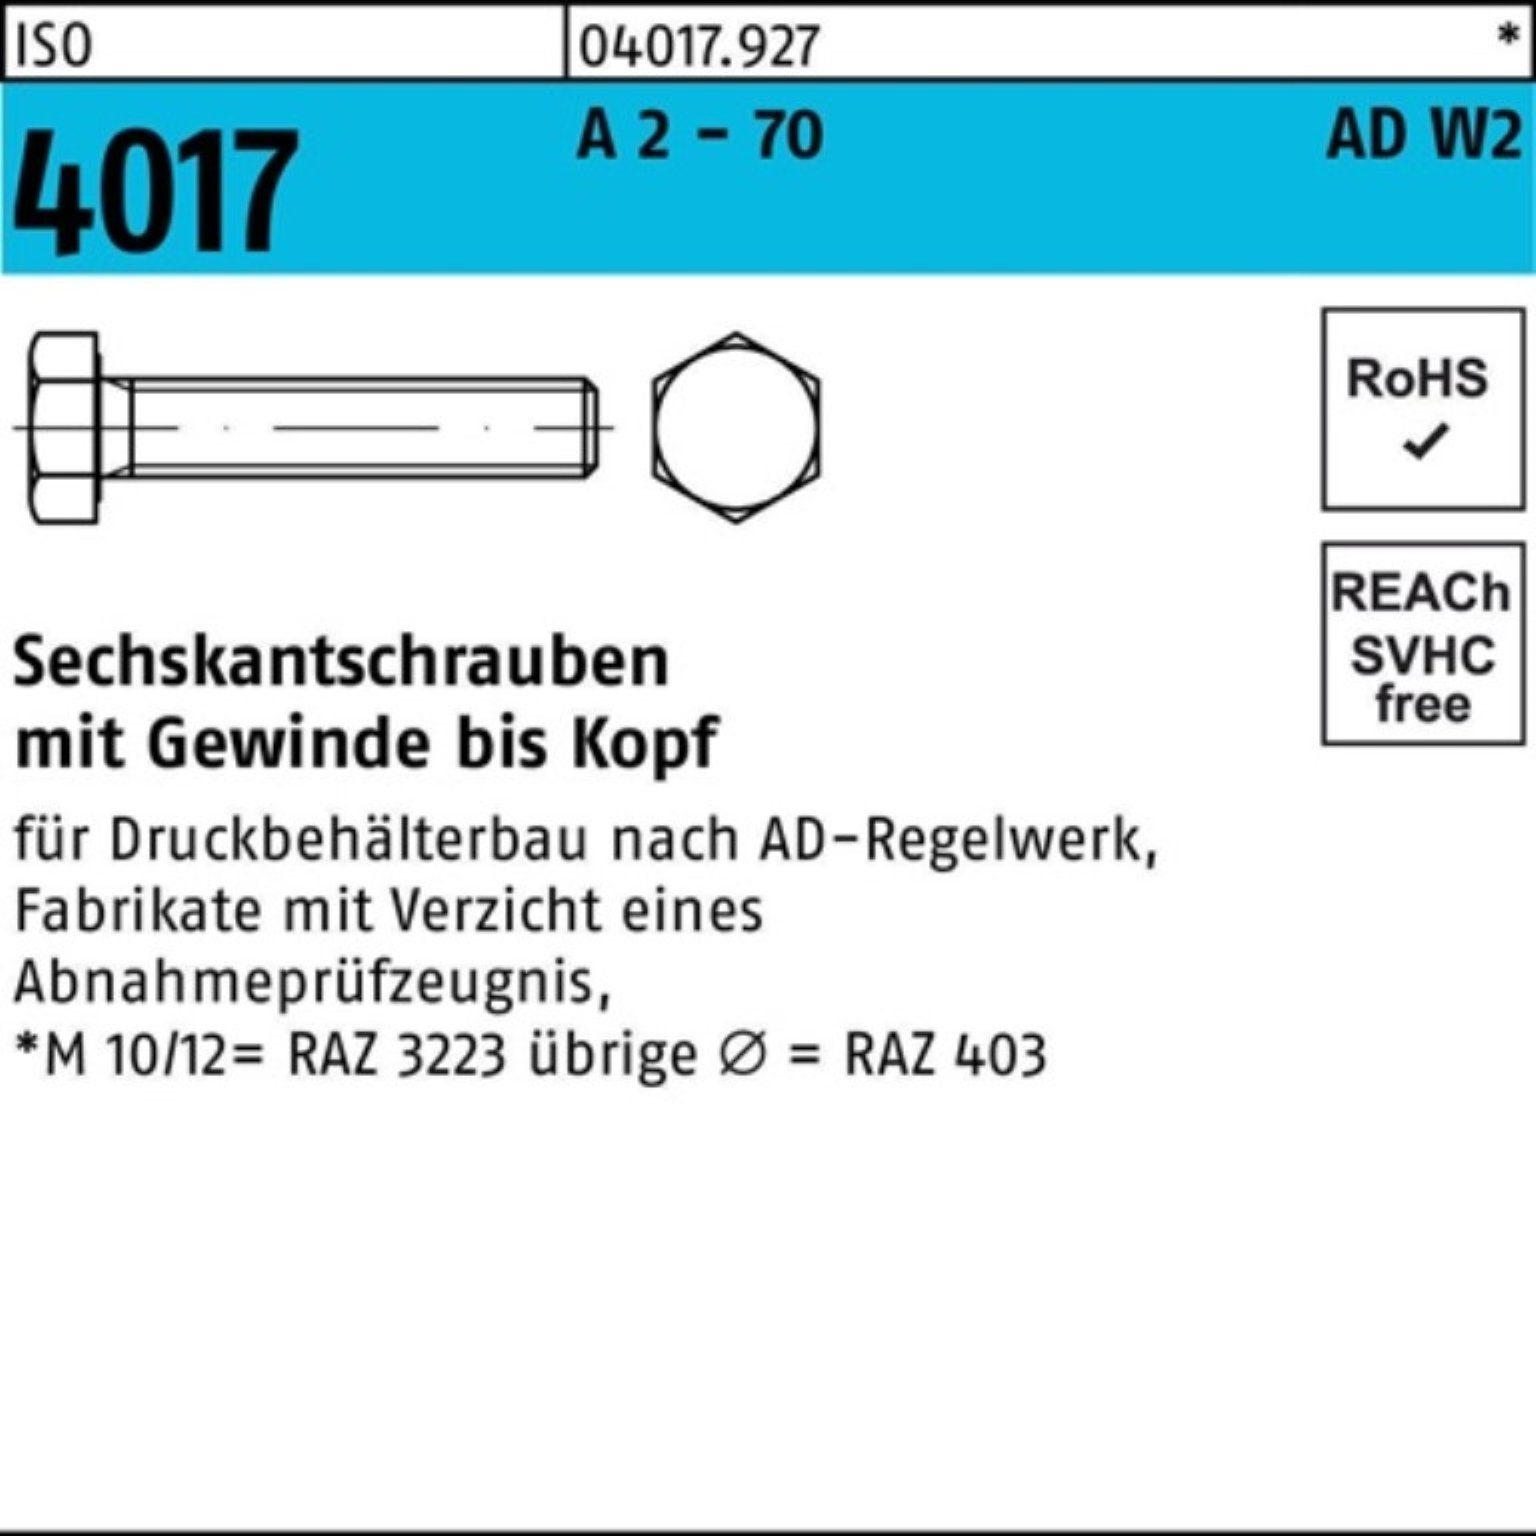 Bufab Sechskantschraube 100er Pack Sechskantschraube ISO 4017 VG M20x 75 A 2 - 70 AD-W2 25 St